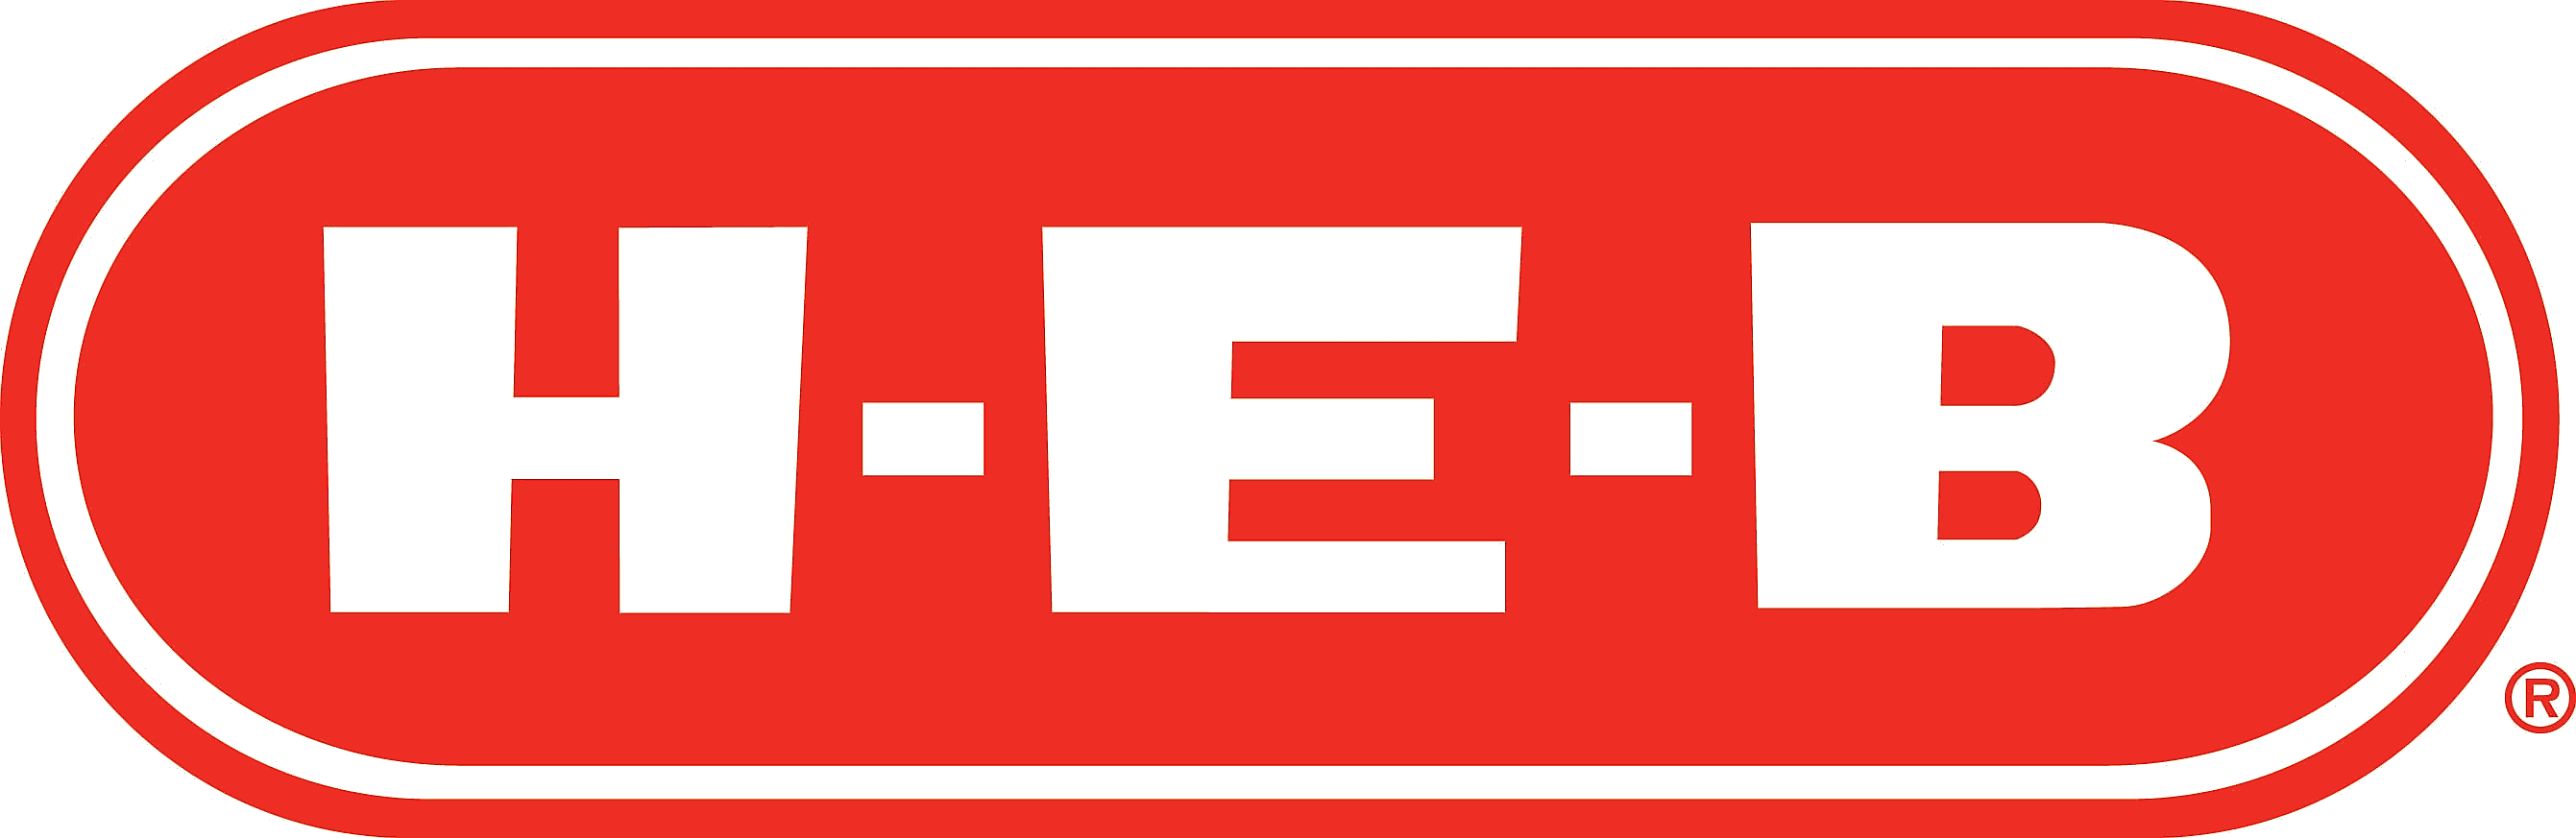 HEB - Logo